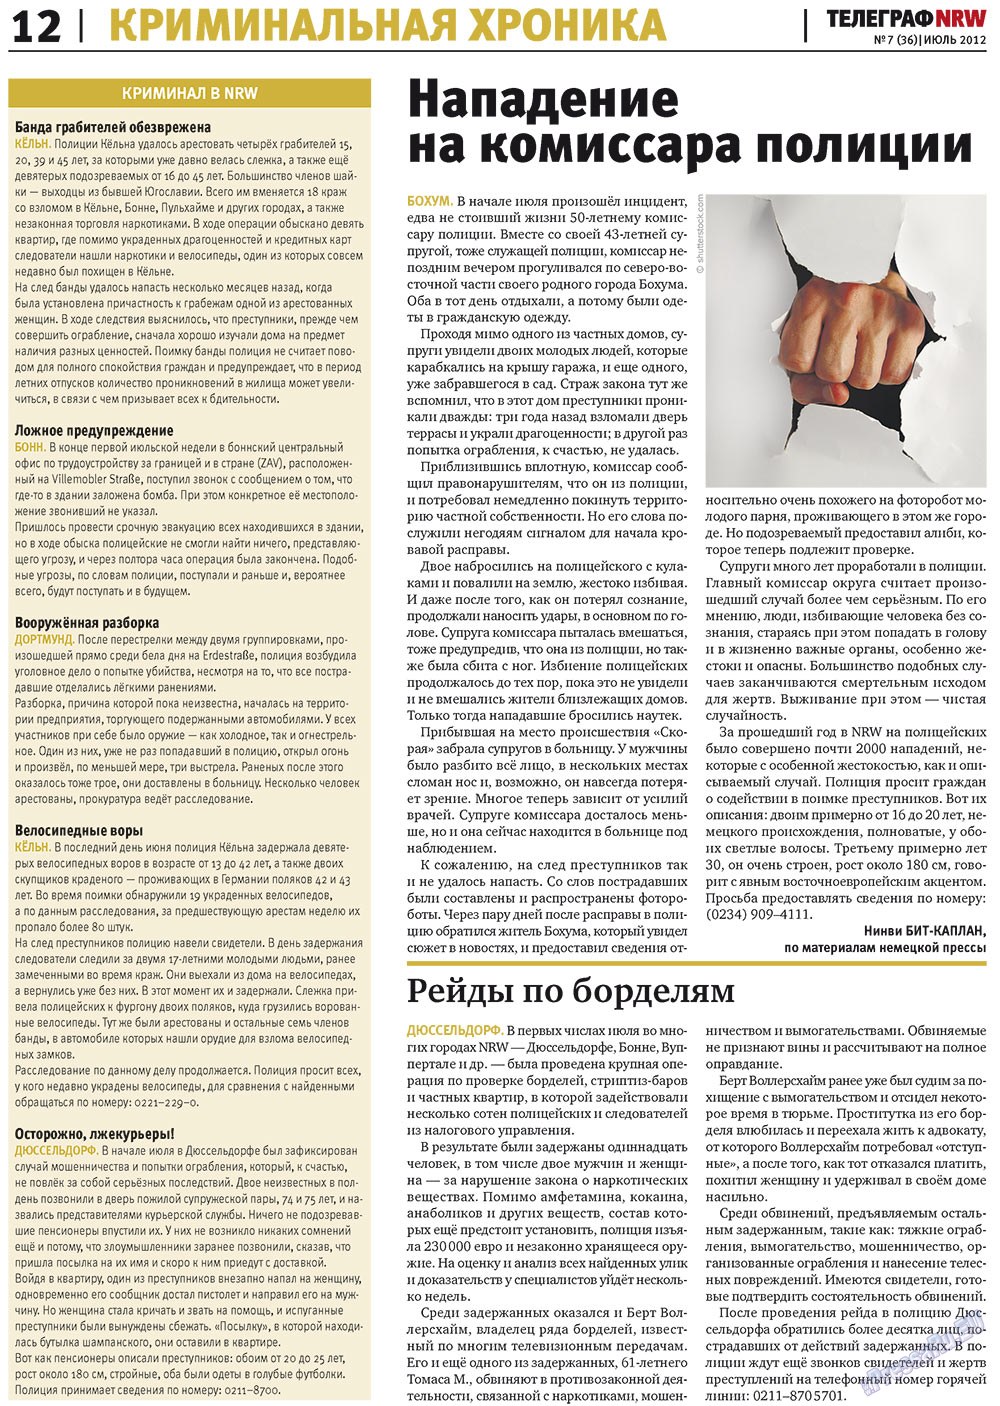 Телеграф NRW, газета. 2012 №7 стр.12